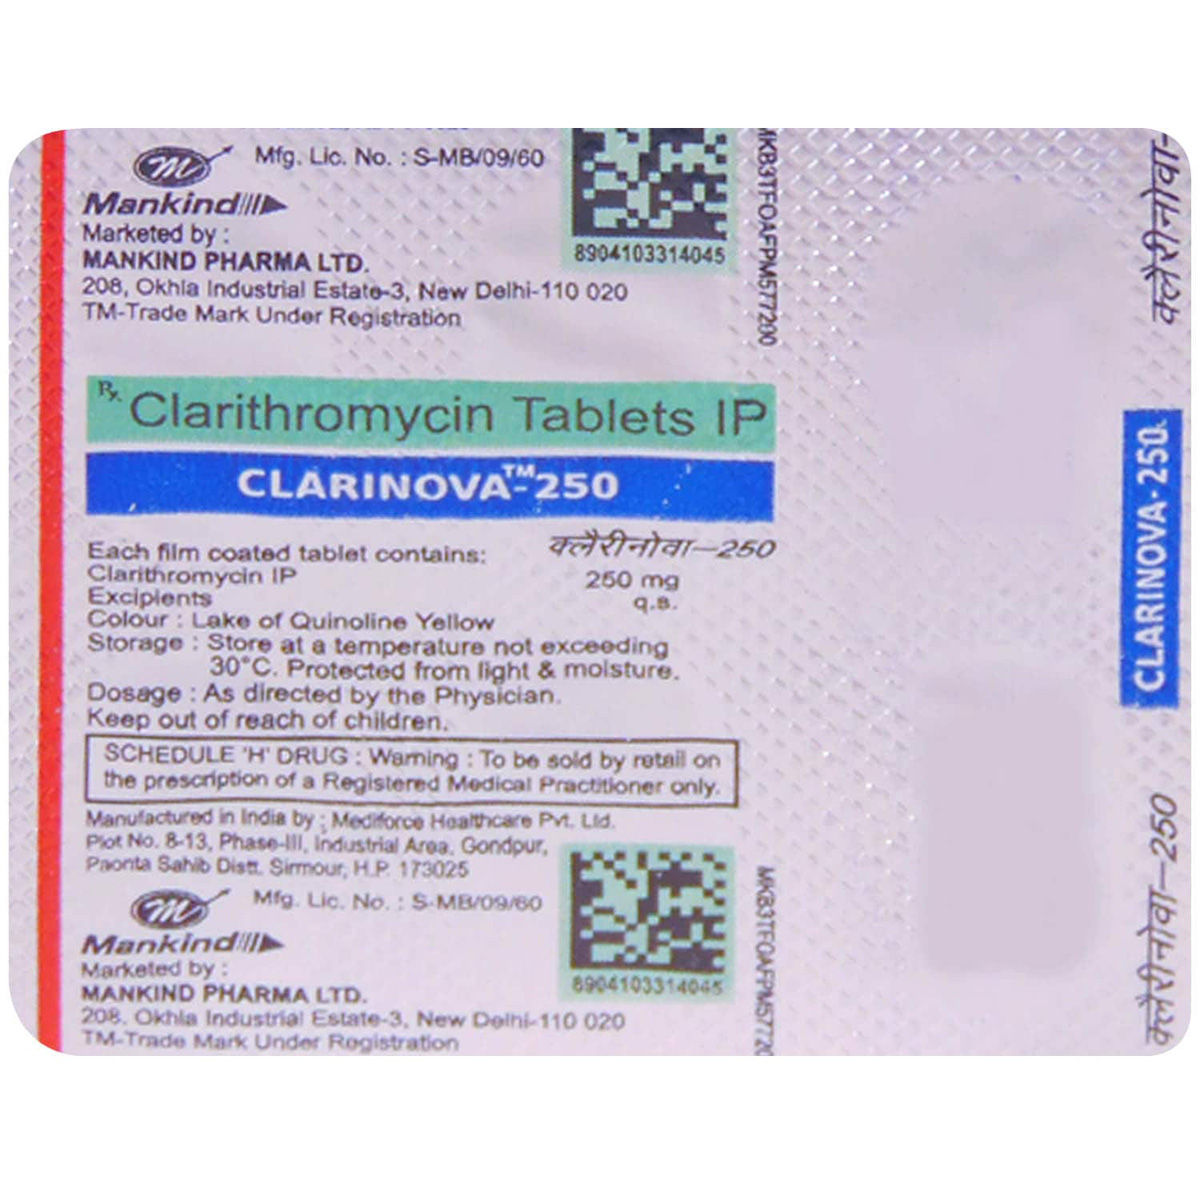 Clarinova-250 Tablet 6's, Pack of 6 TABLETS